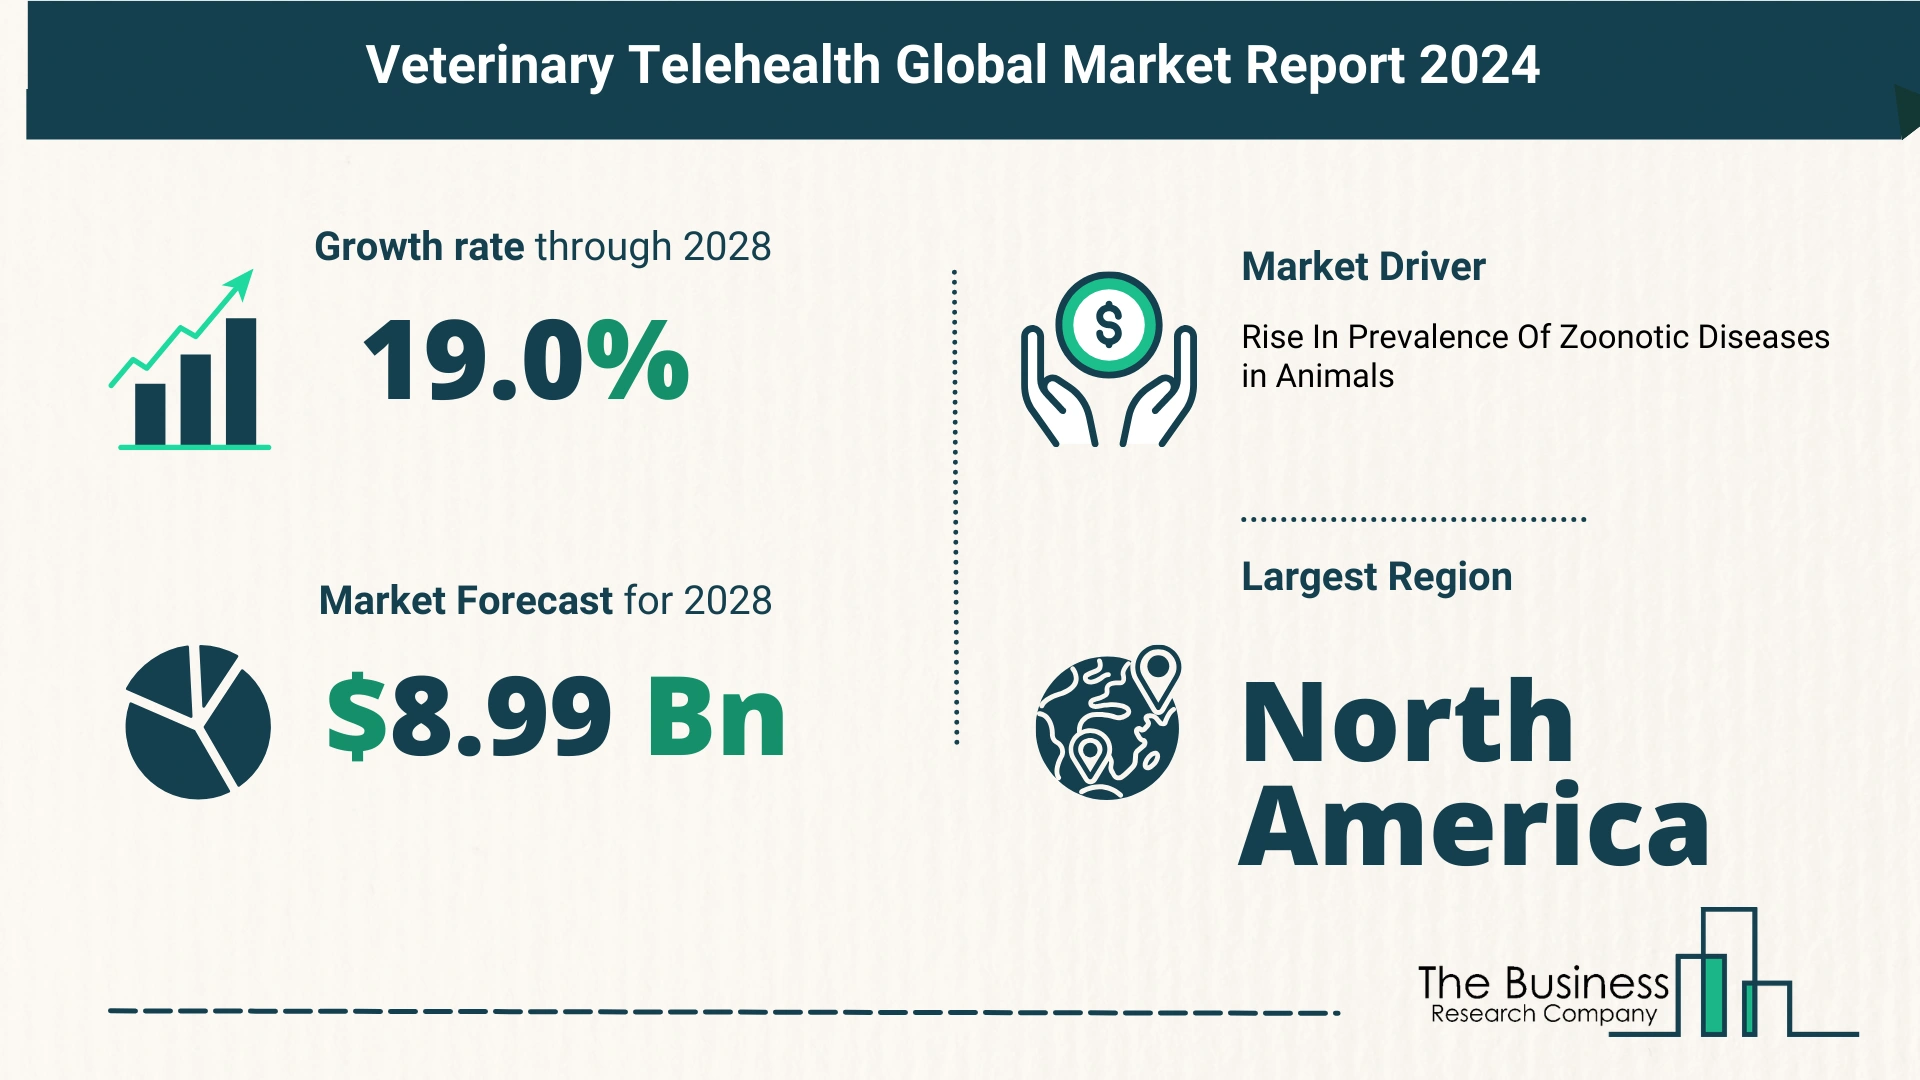 Key Takeaways From The Global Veterinary Telehealth Market Forecast 2024